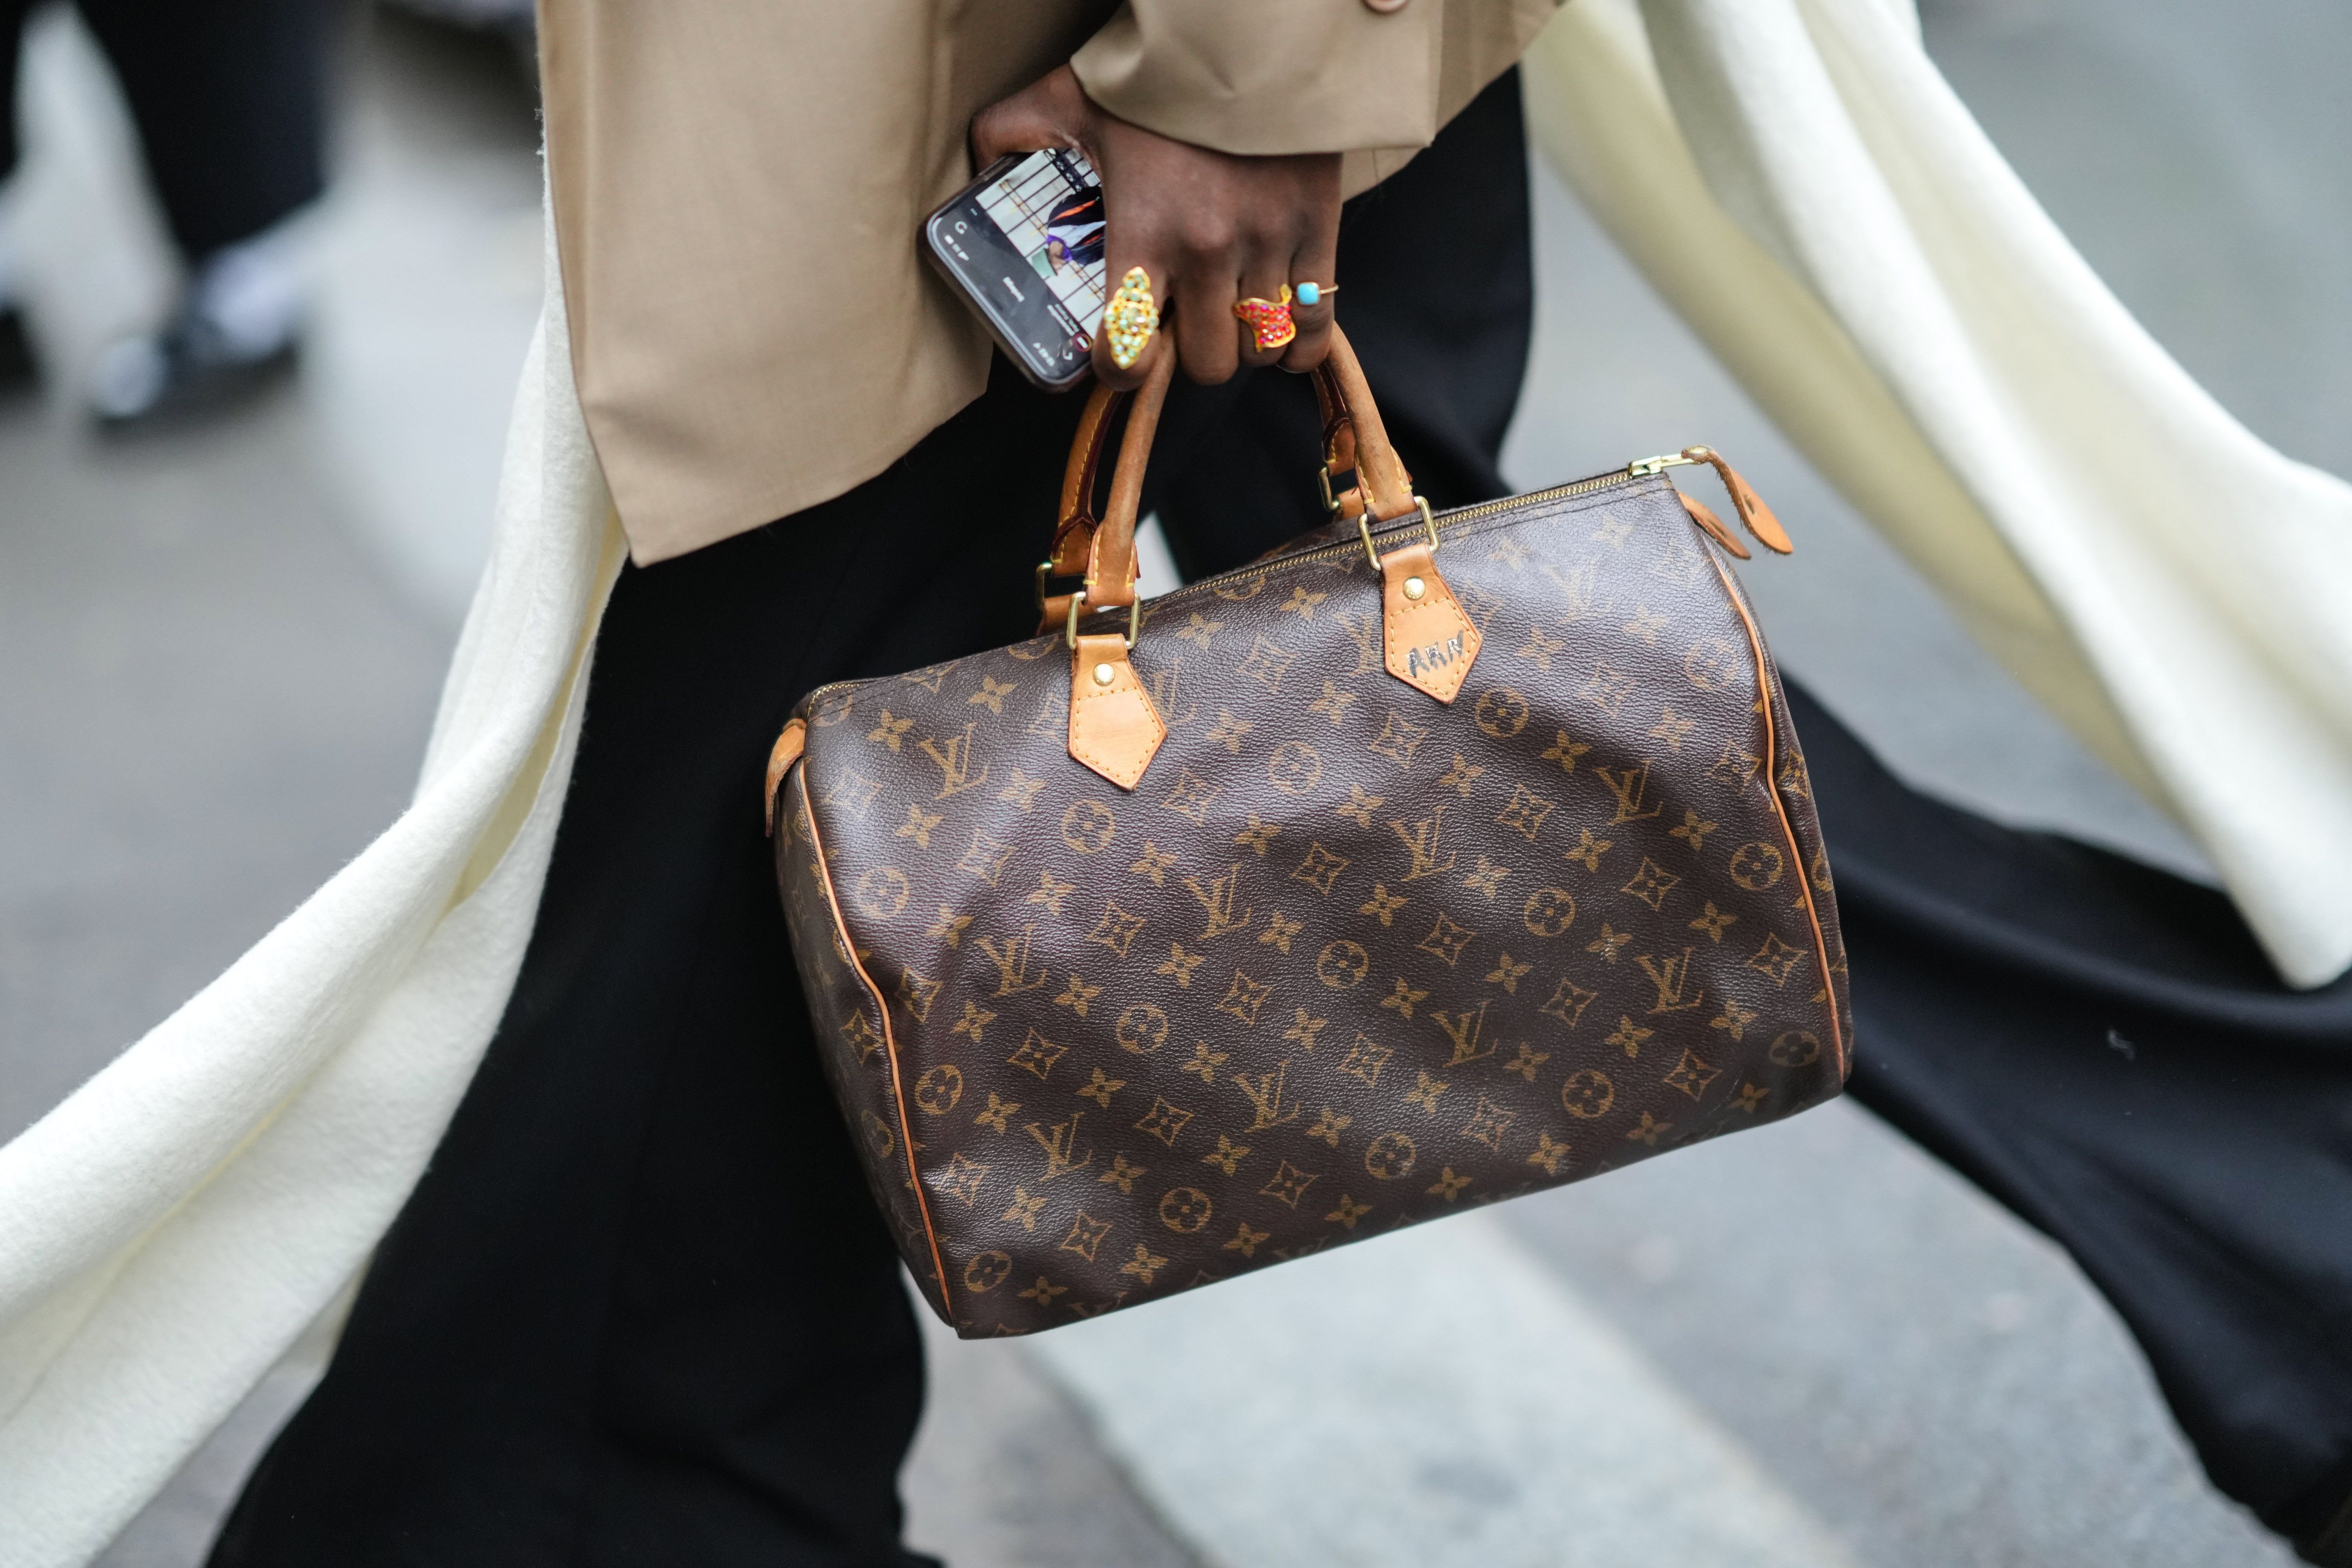 Why are women's handbags so expensive? - Quora